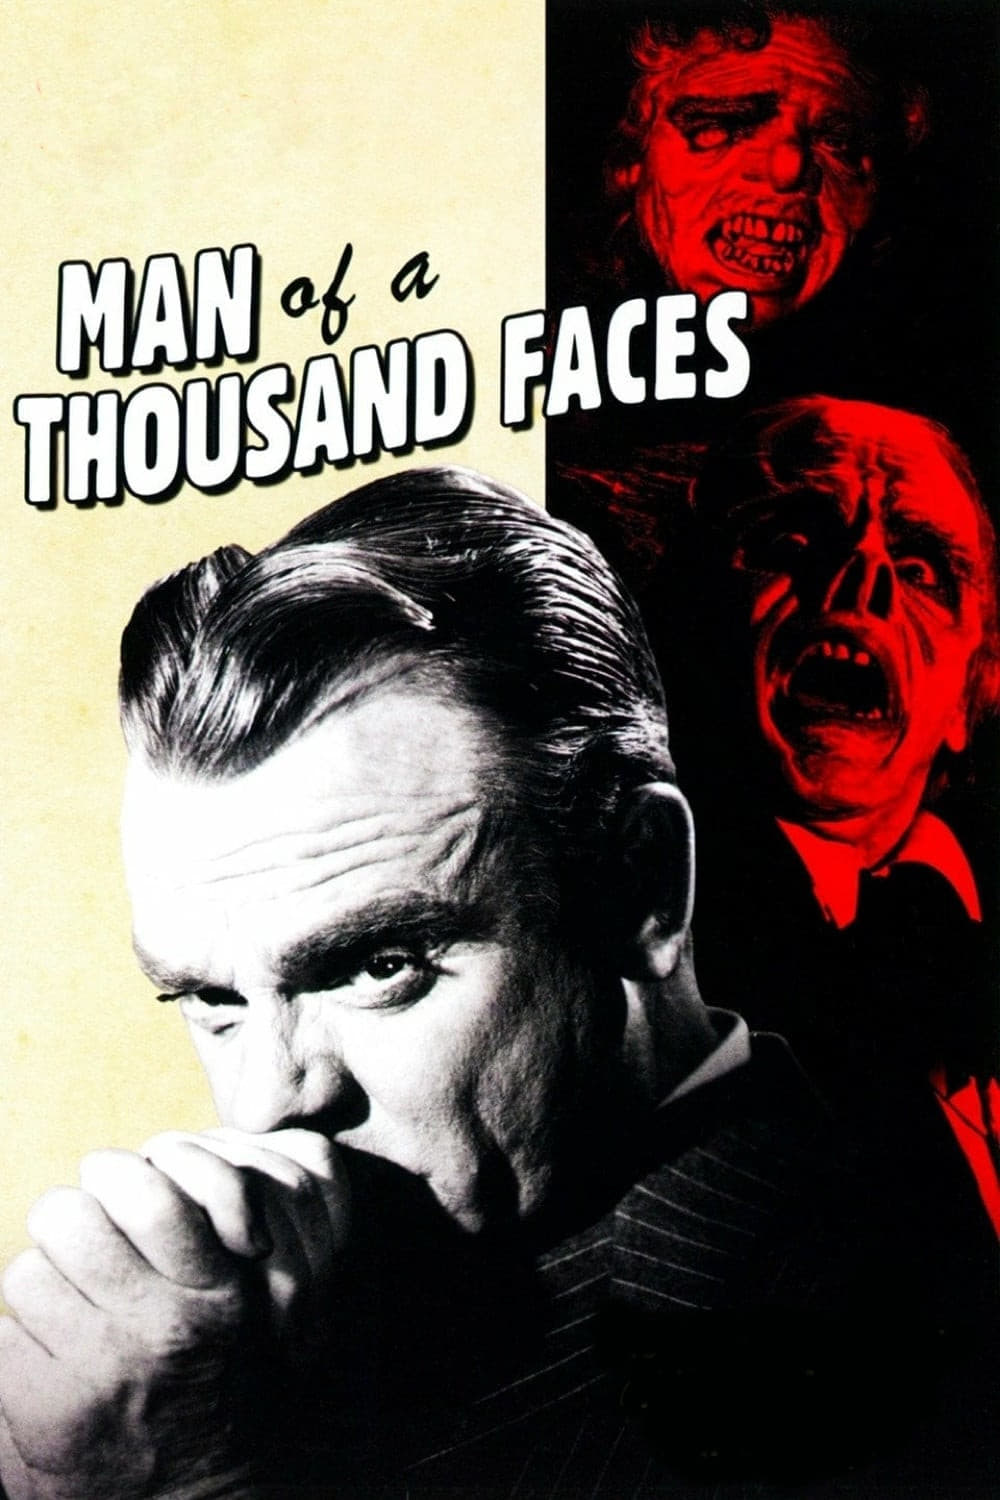 Man of a Thousand Faces (1957)